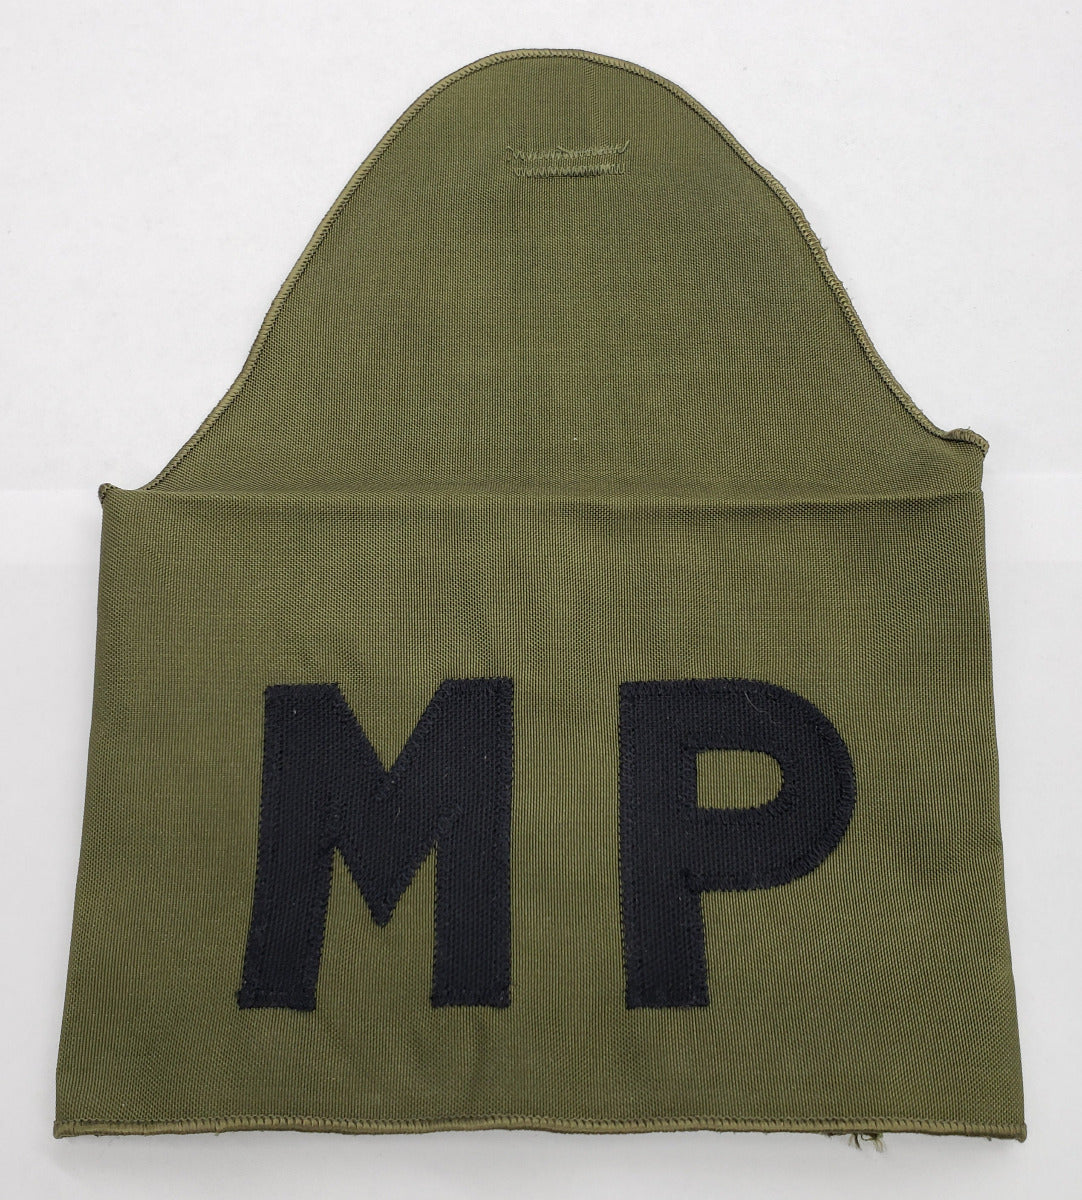 'MP' Military Police Armband Brassard